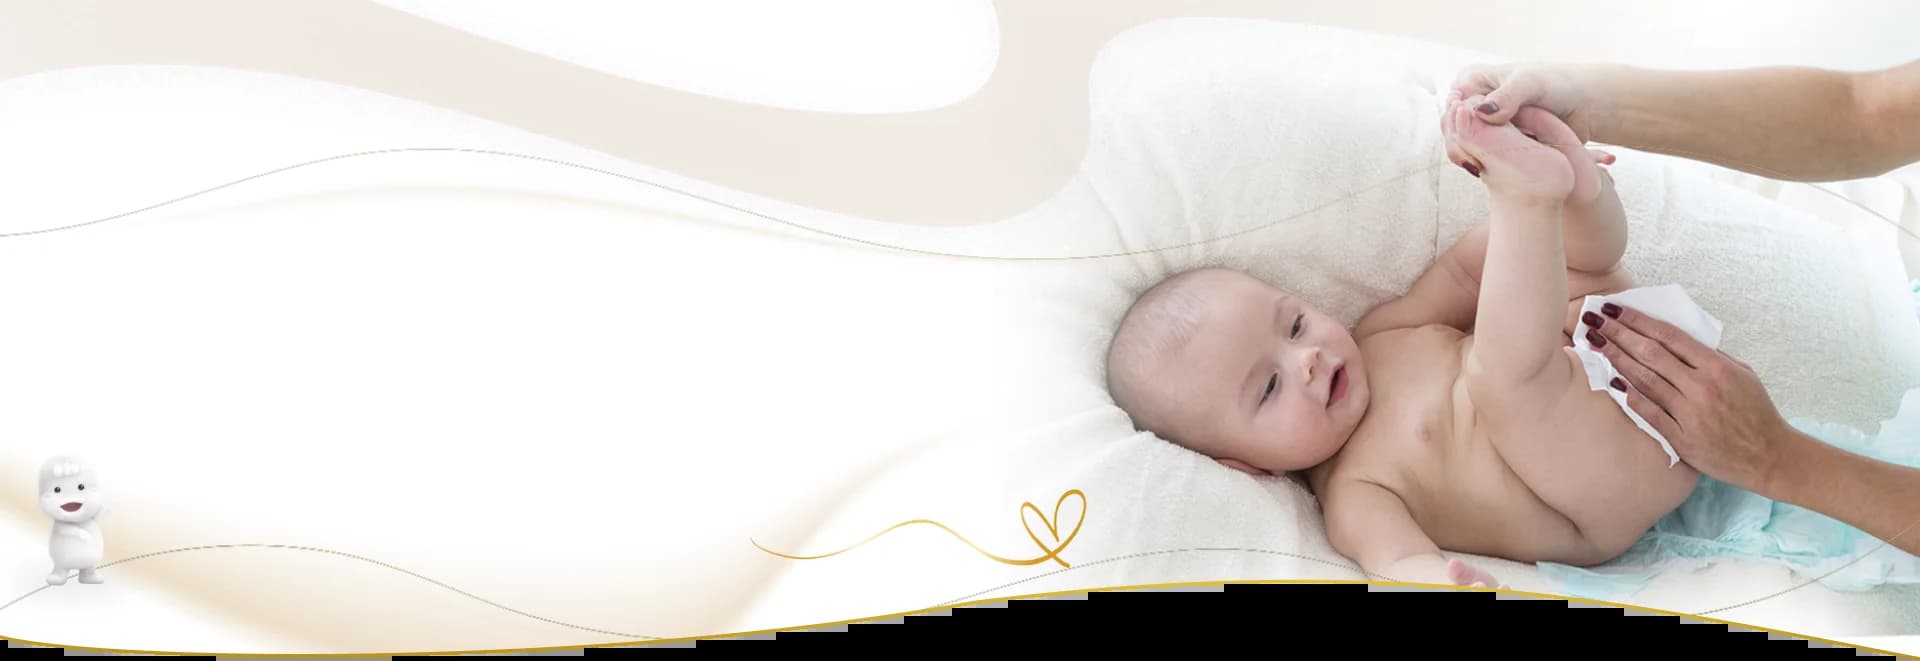 Premium Baby Care: MamyPoko Wipes